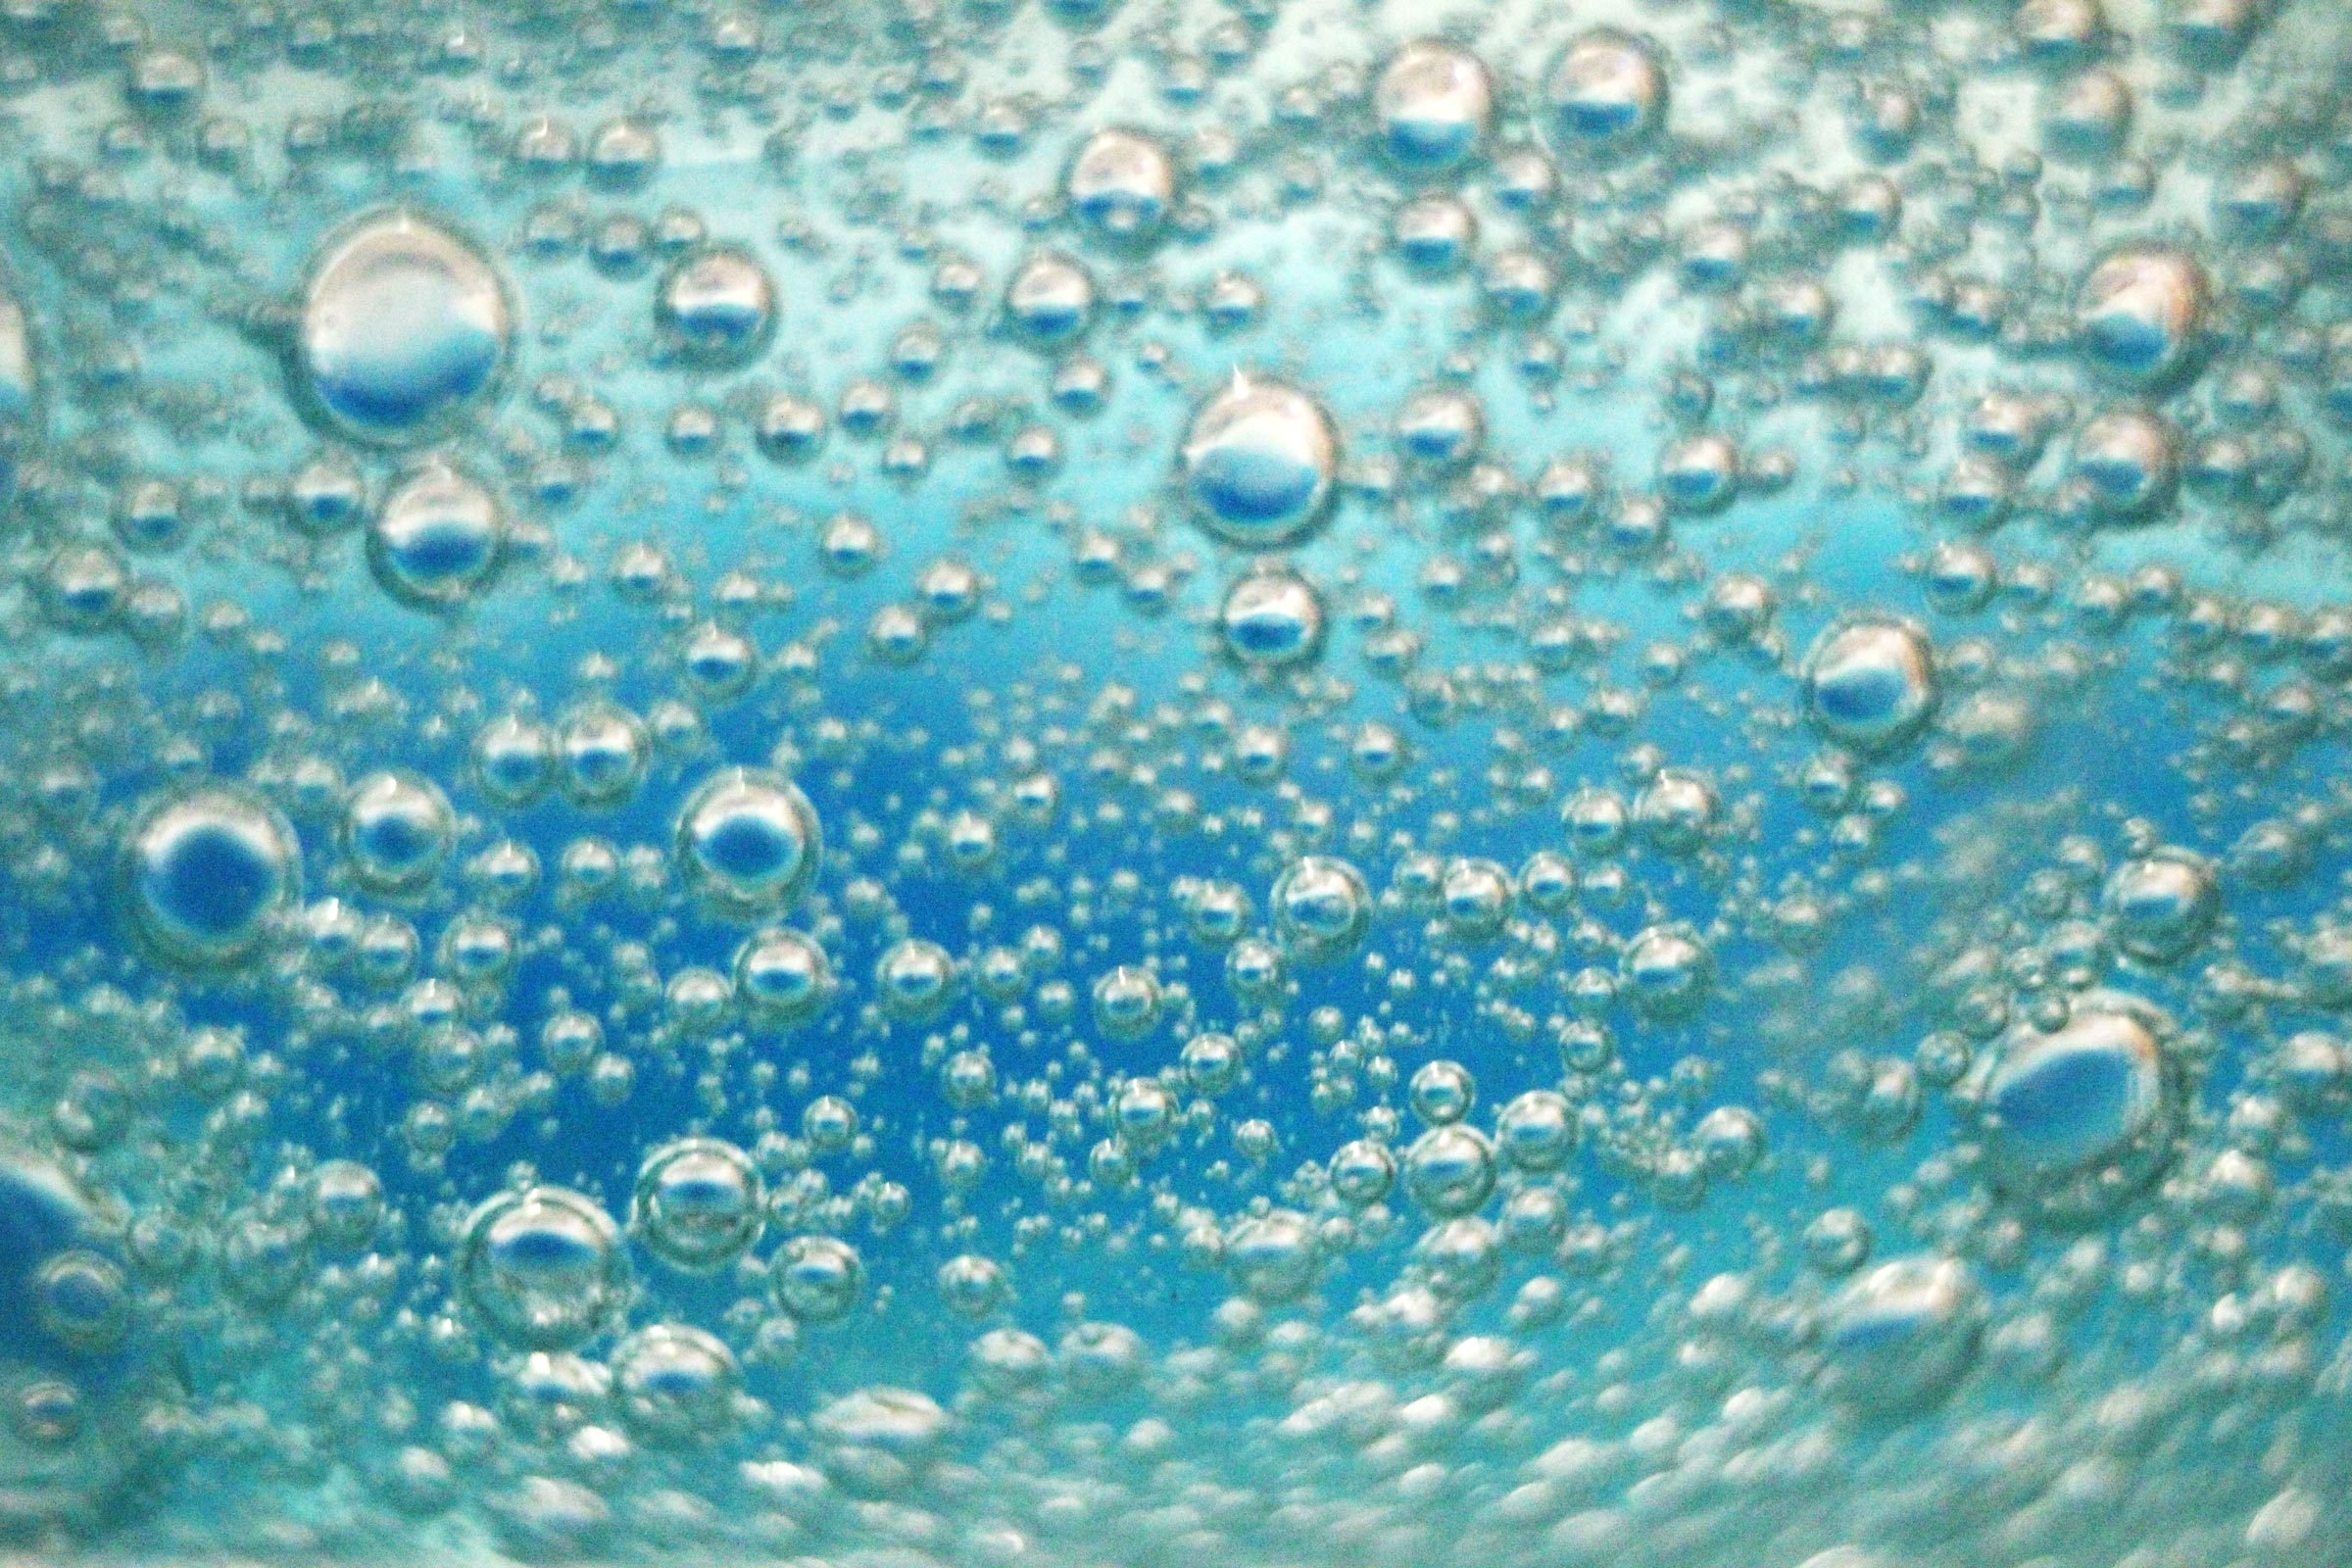 hydrogen peroxide mouthwash recall